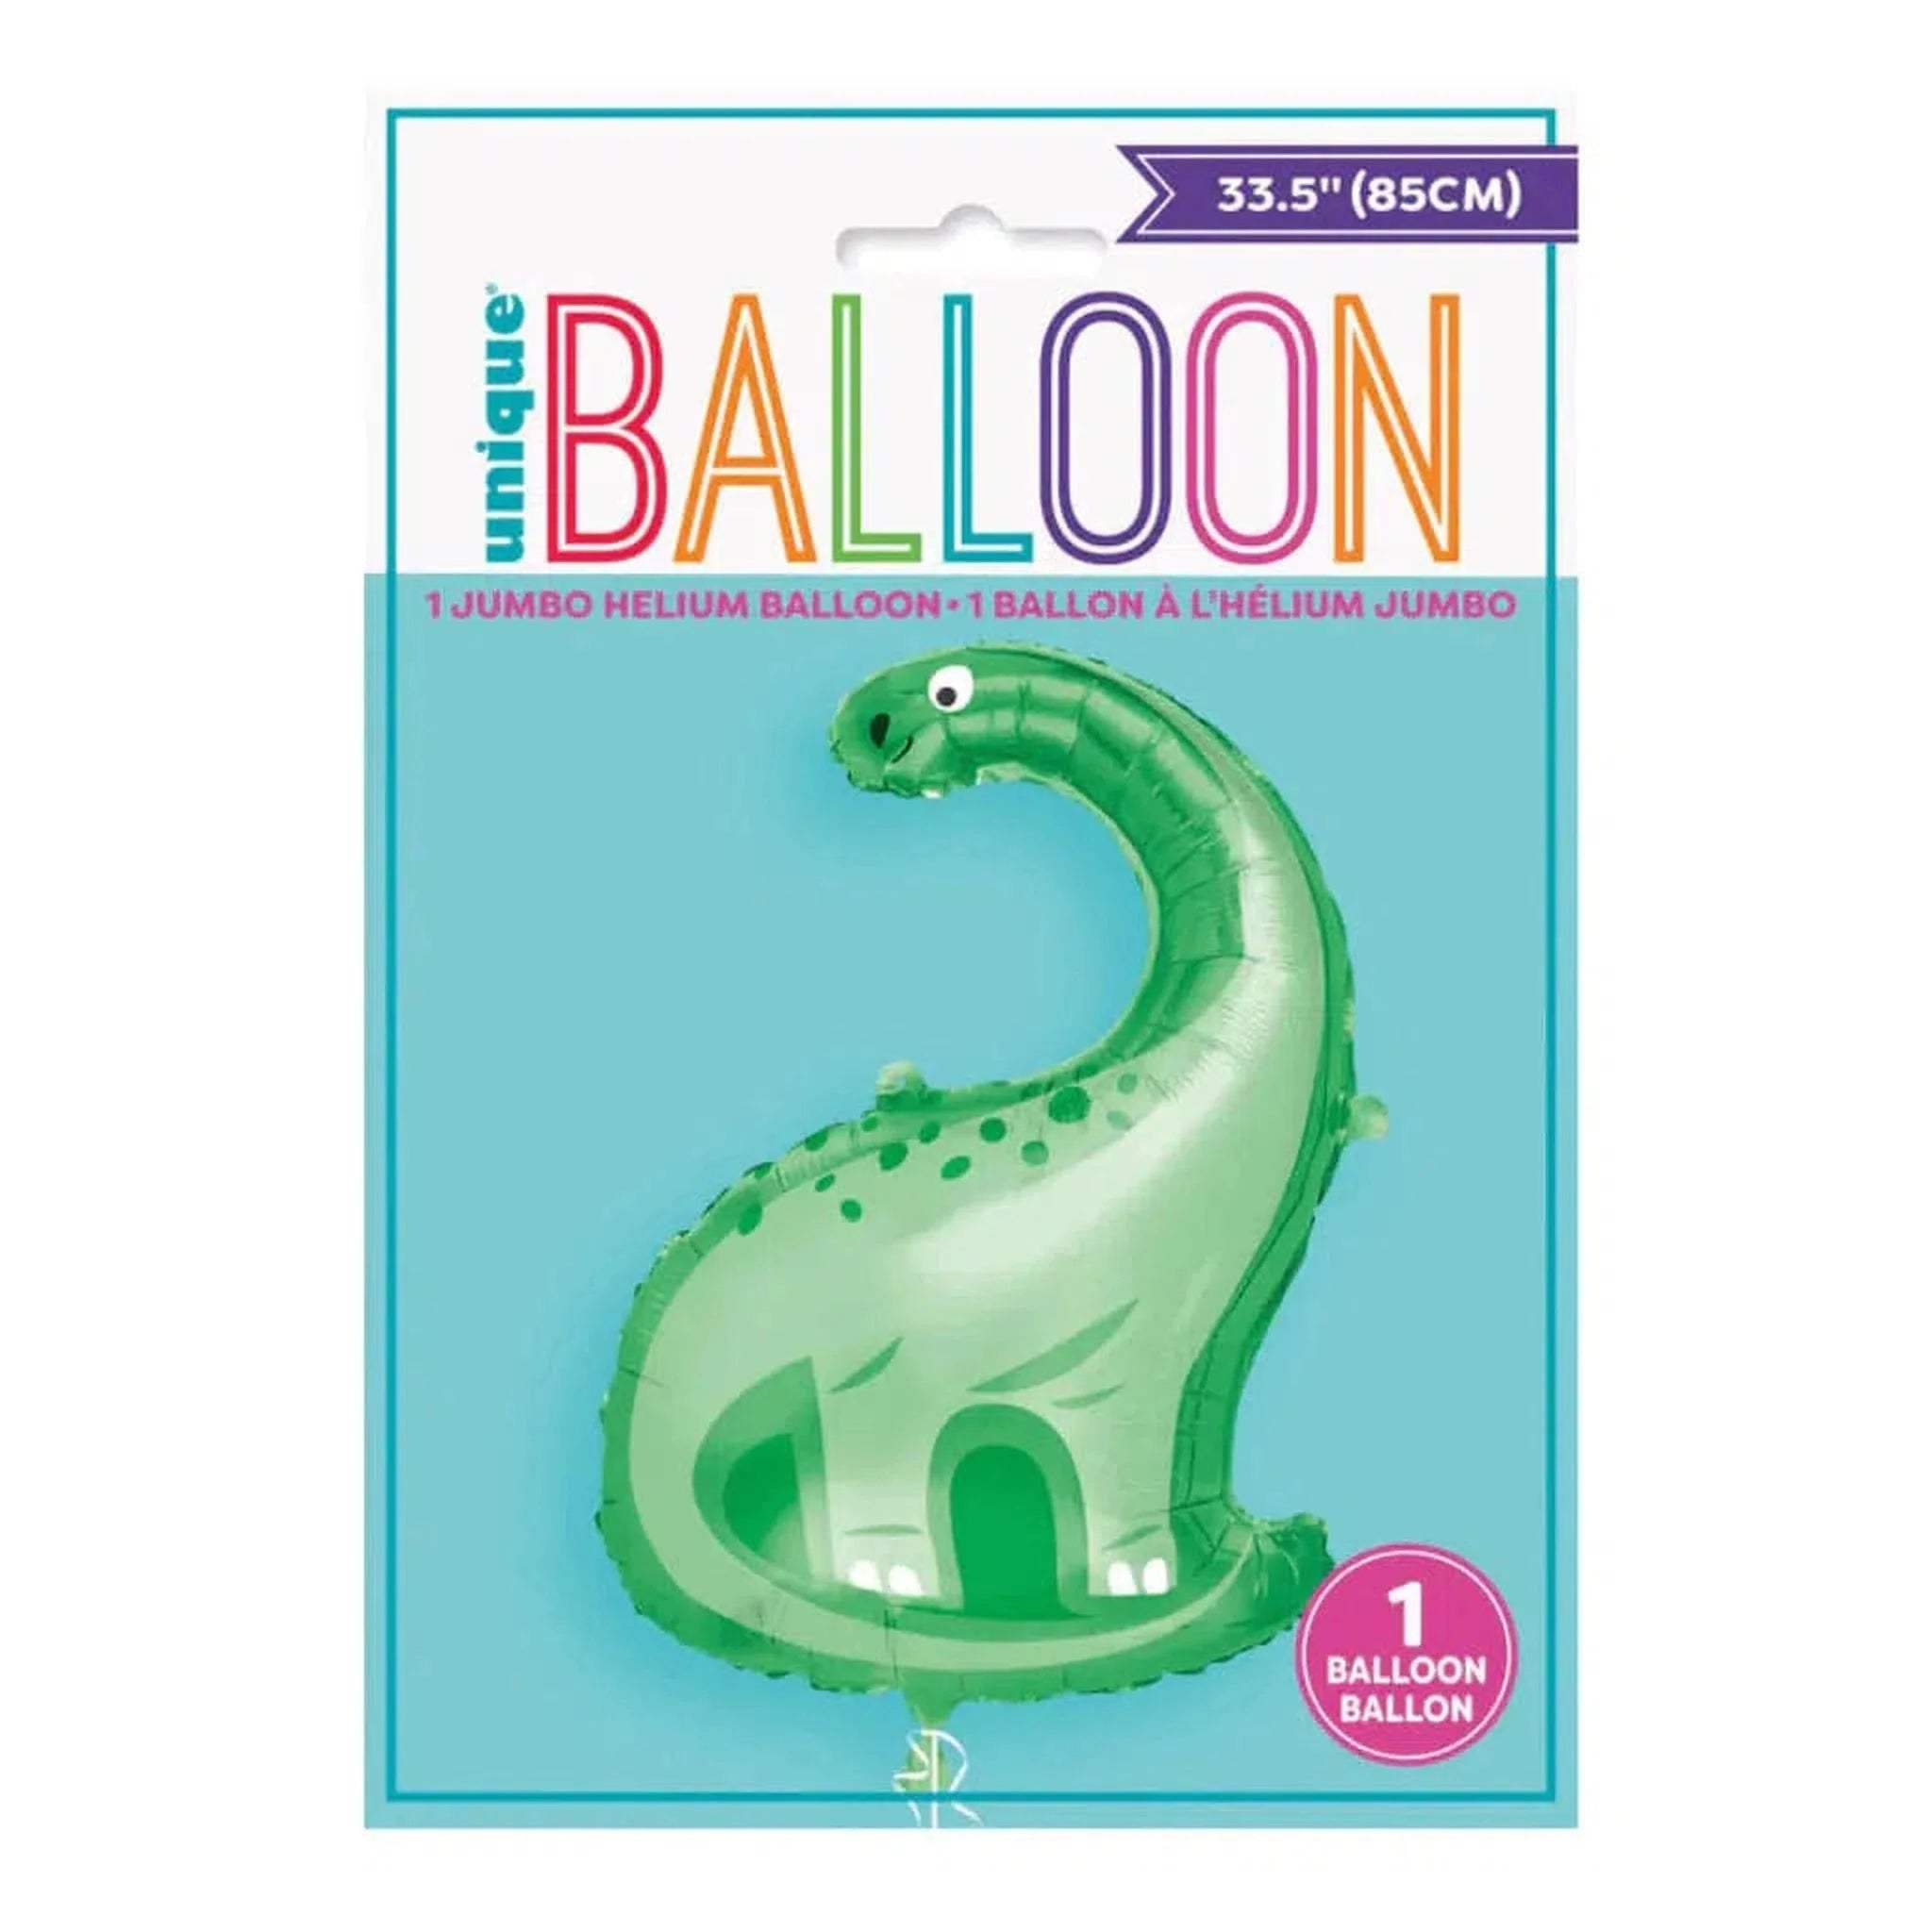 Dinosaur 33.5" Giant Foil Balloon - Kids Party Craft